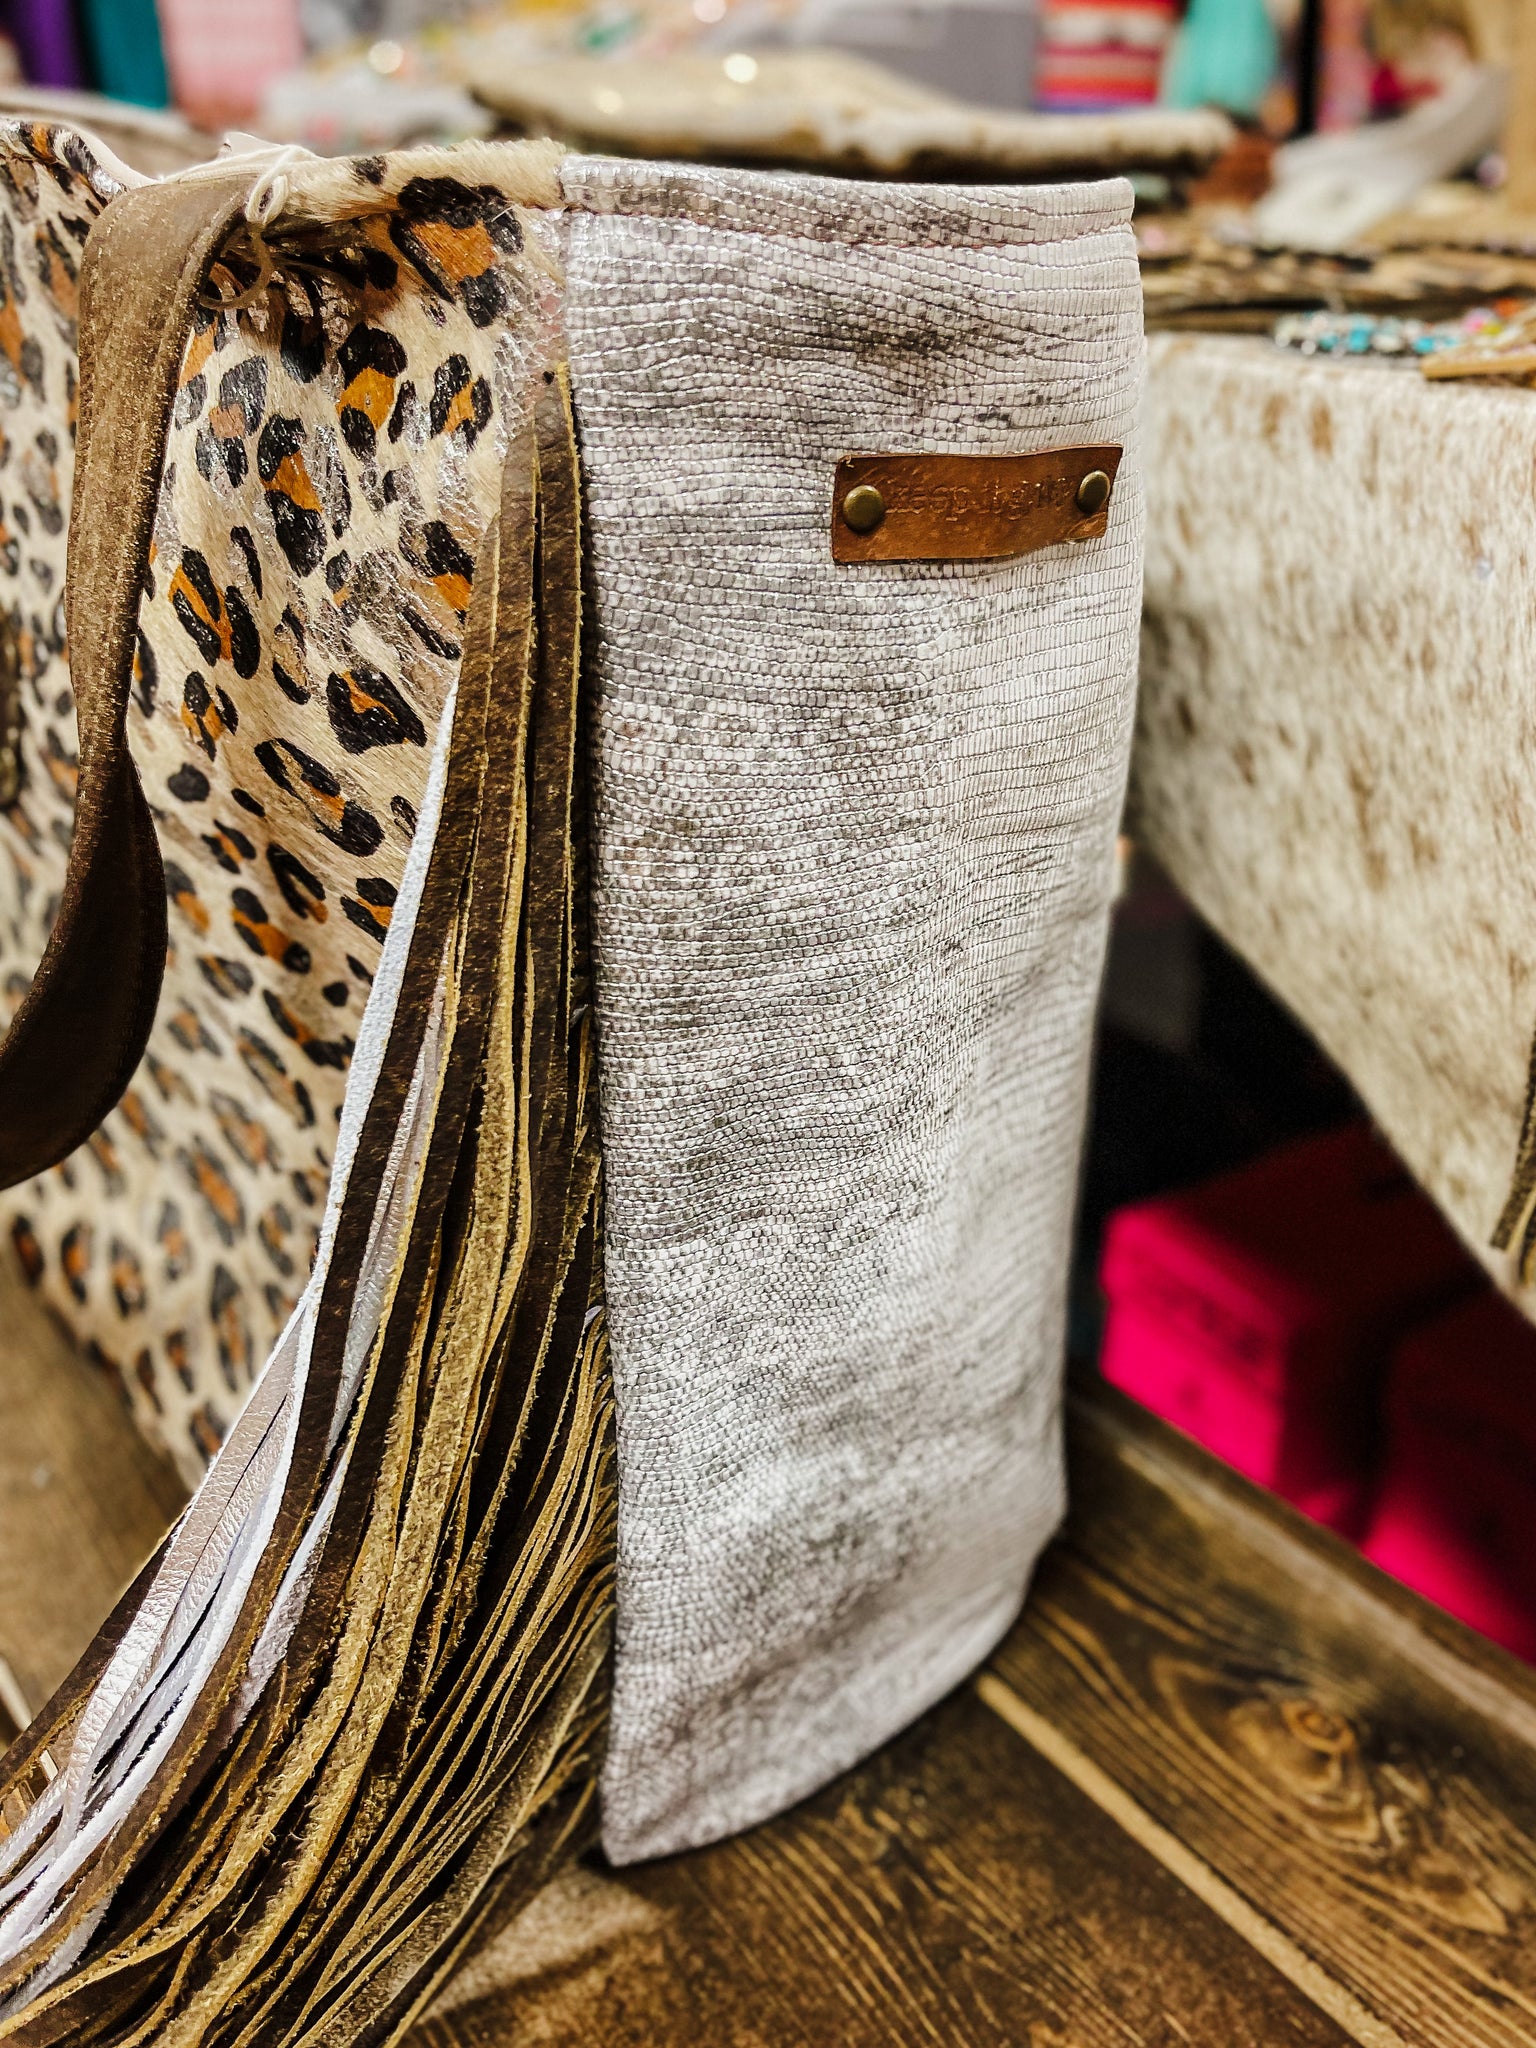 New repurposed Louis Vuitton leopard print purse